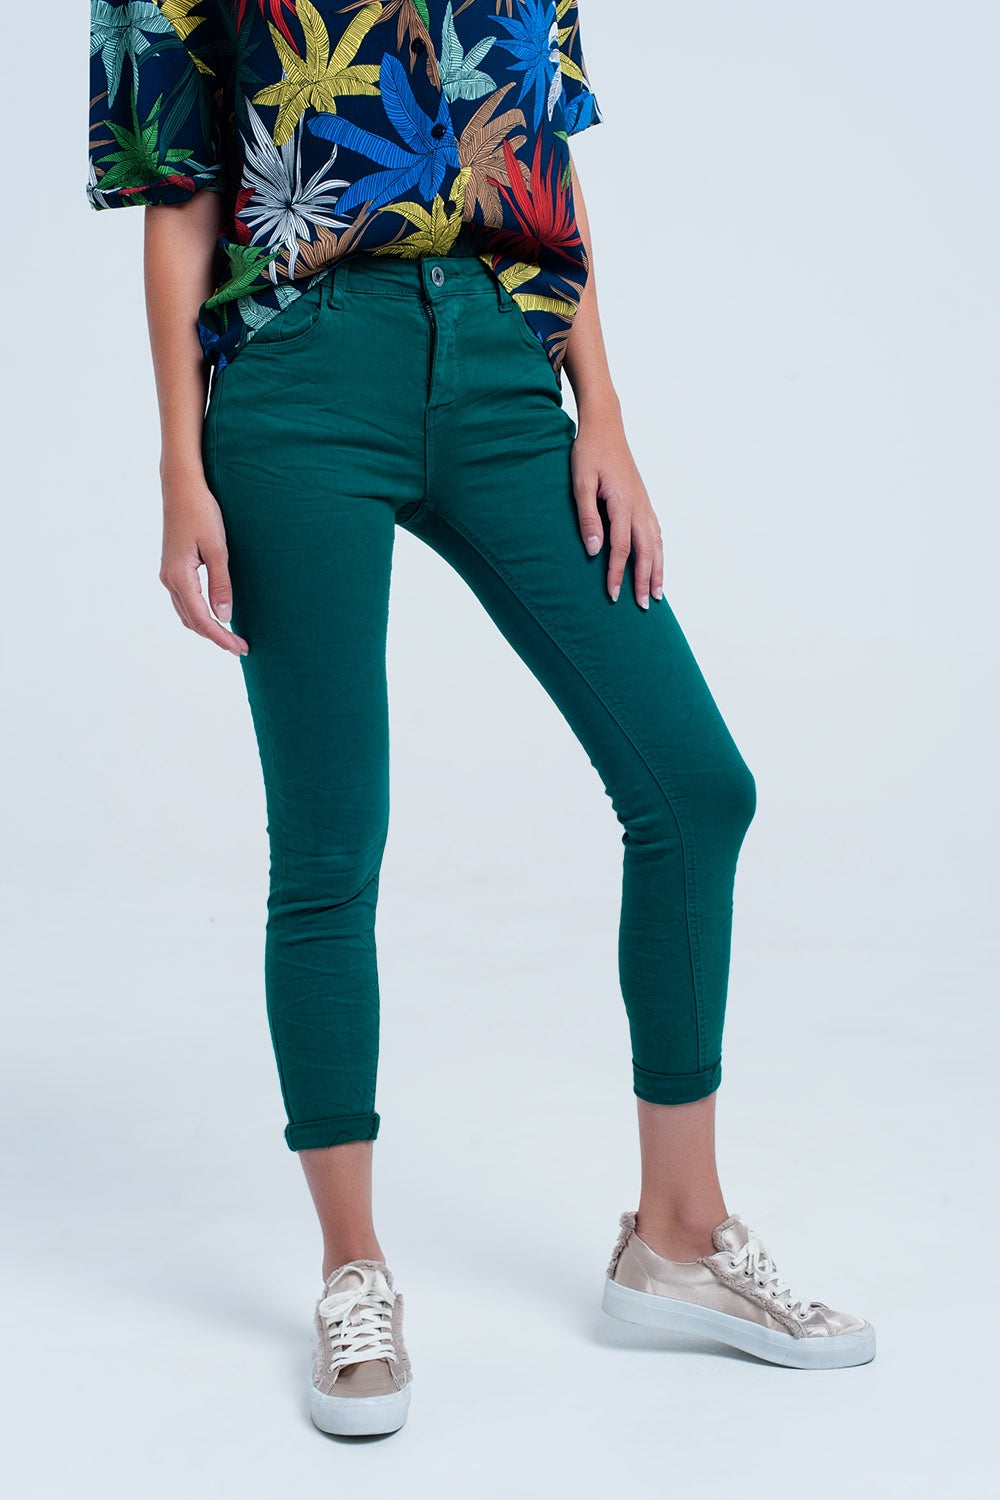 Q2 Skinny green elastic jeans